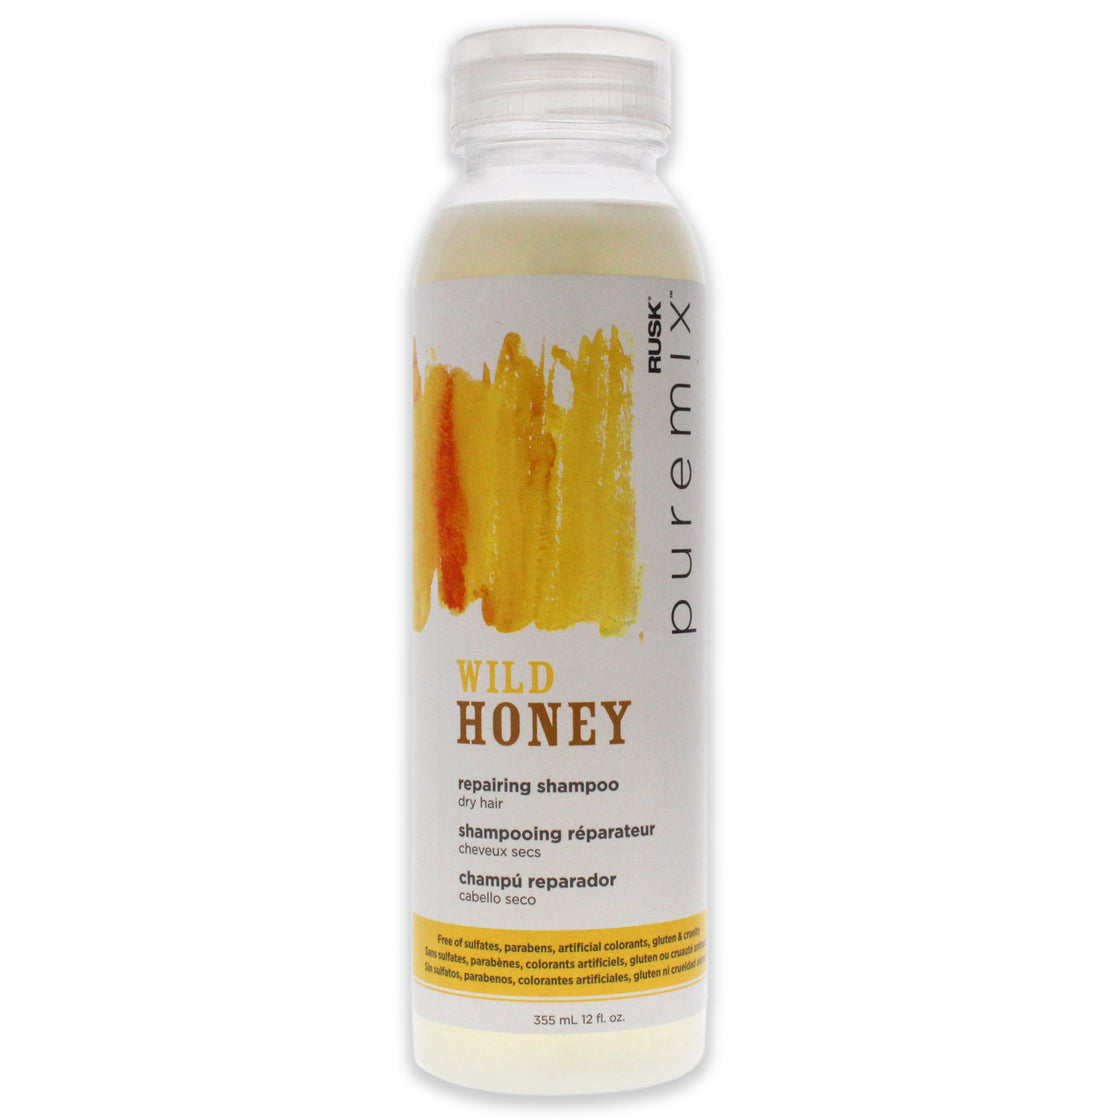 Puremix Wild Honey Repairing Shampoo - Dry Hair by Rusk for Unisex - 12 oz Shampoo